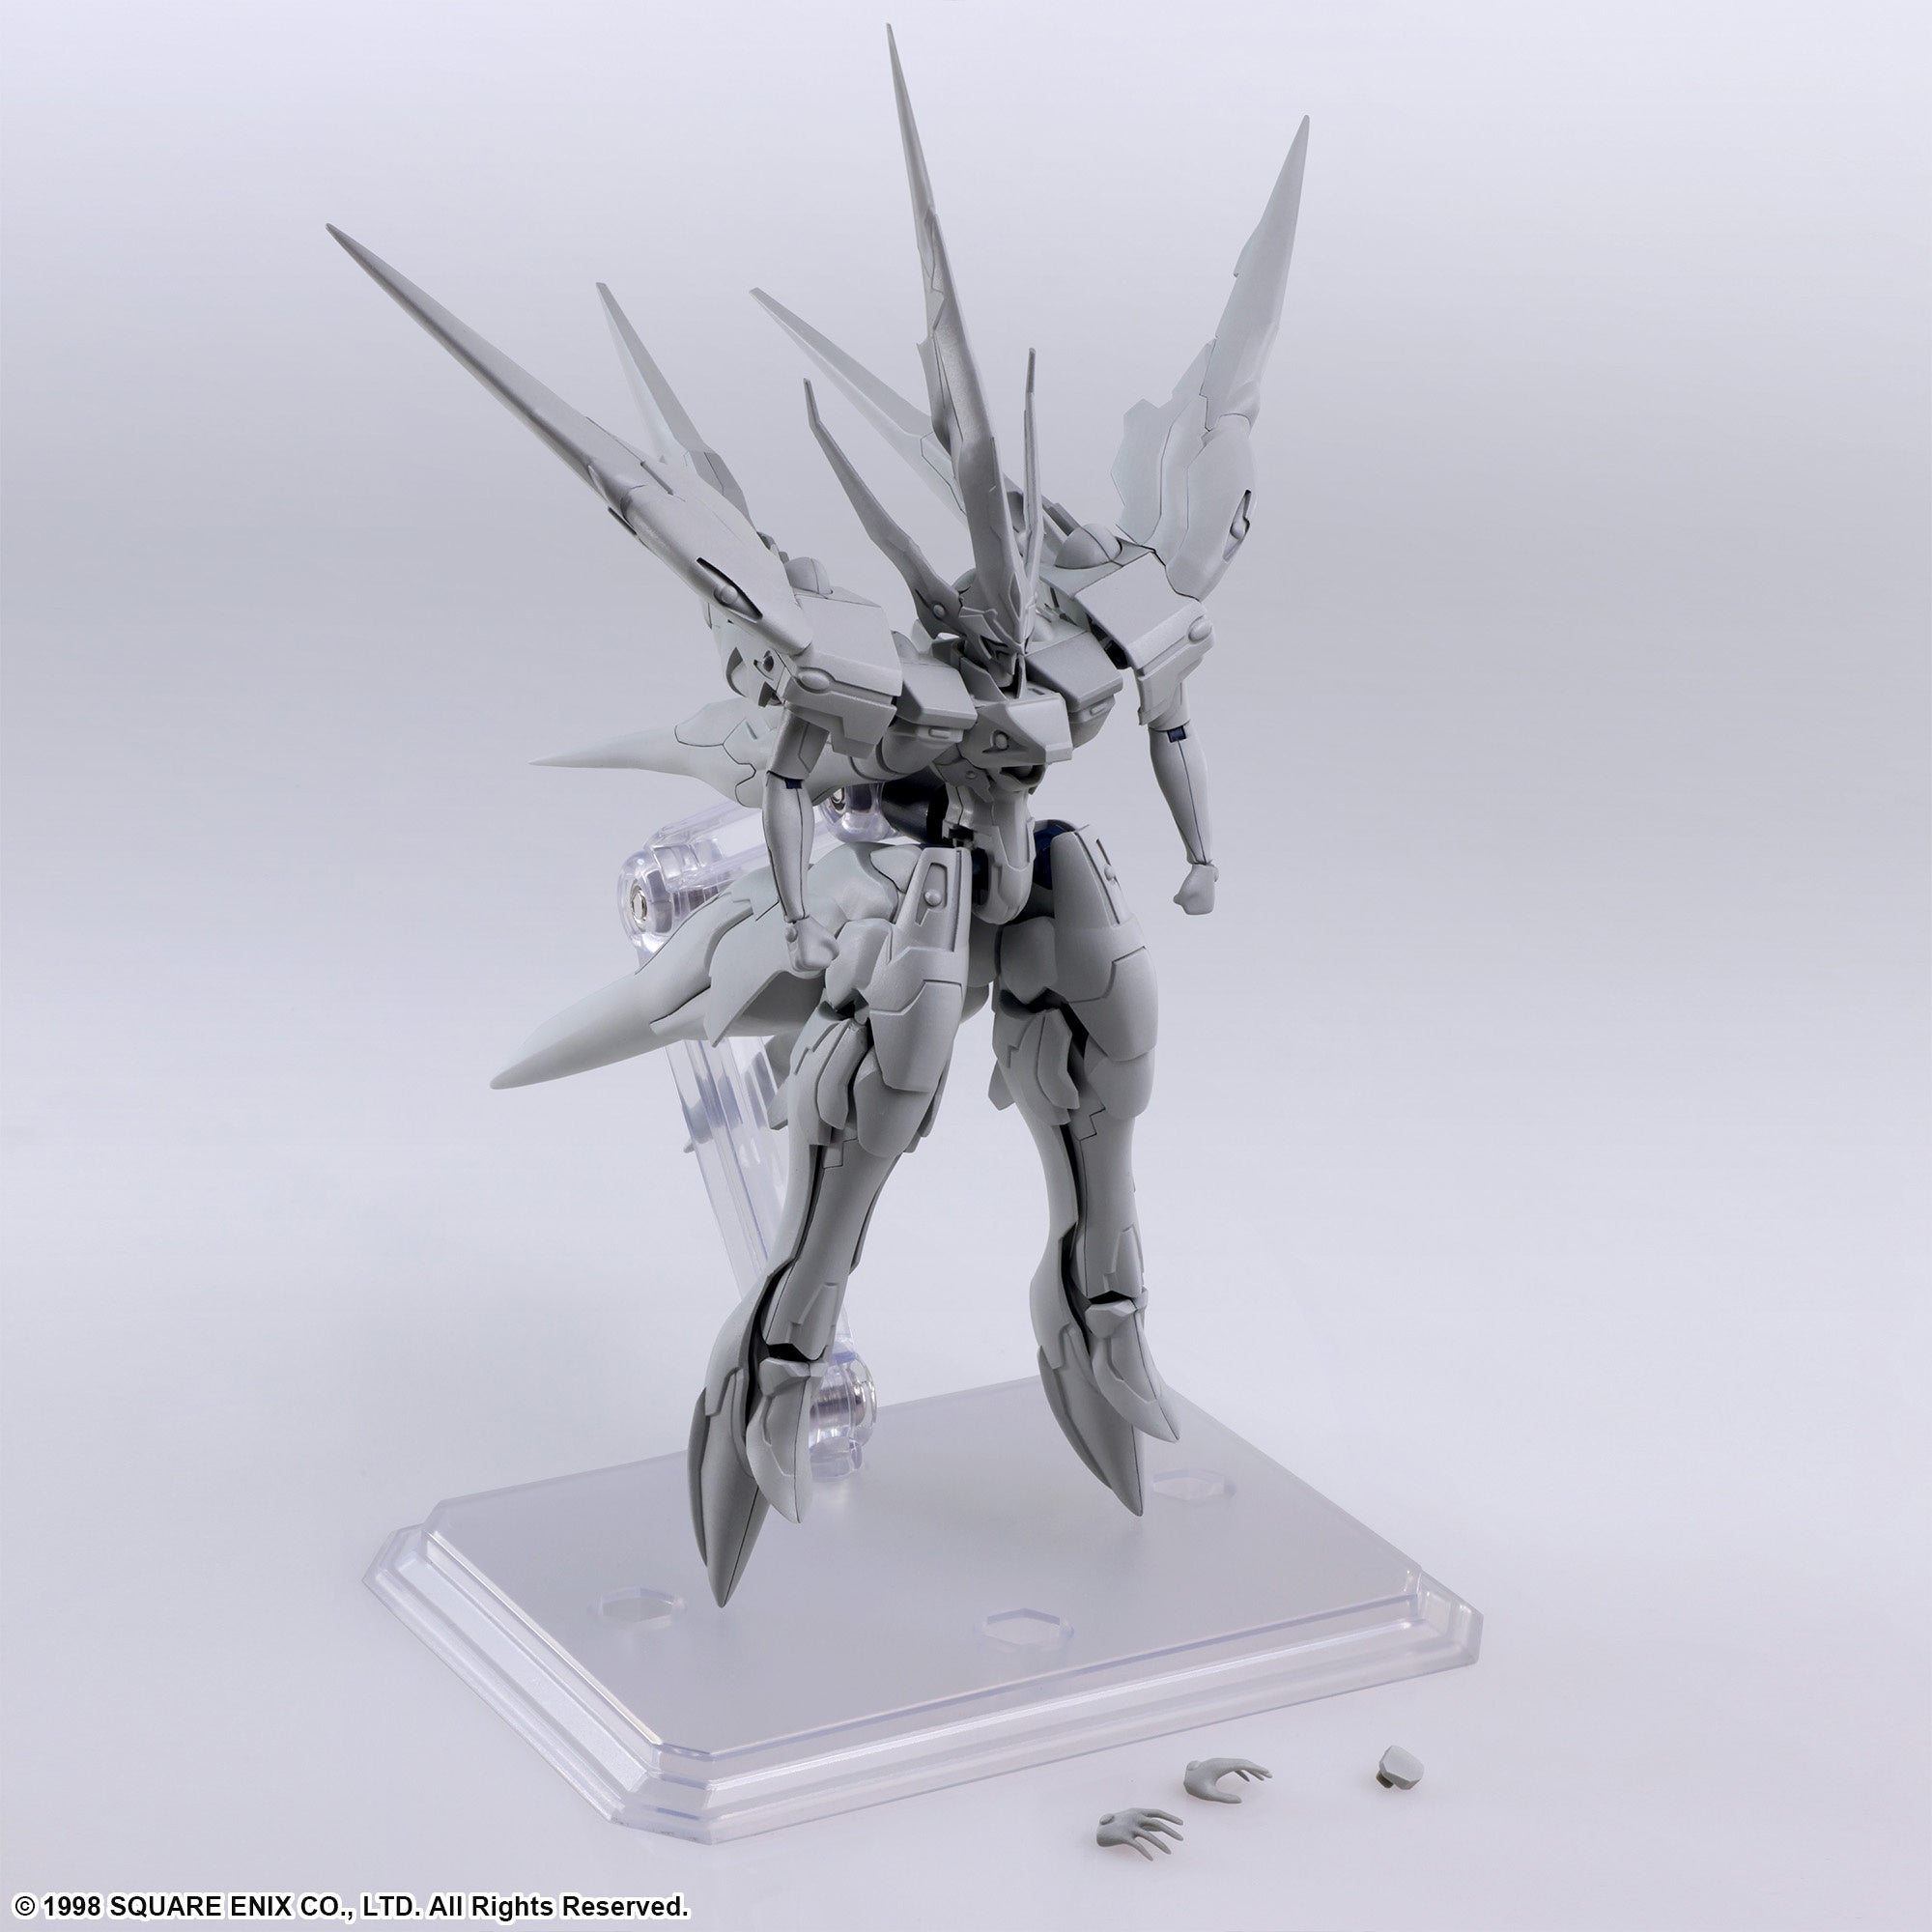 Square Enix Xenogears Structure Arts 1/144 Scale Plastic Model Kit Series Vol.2 Box